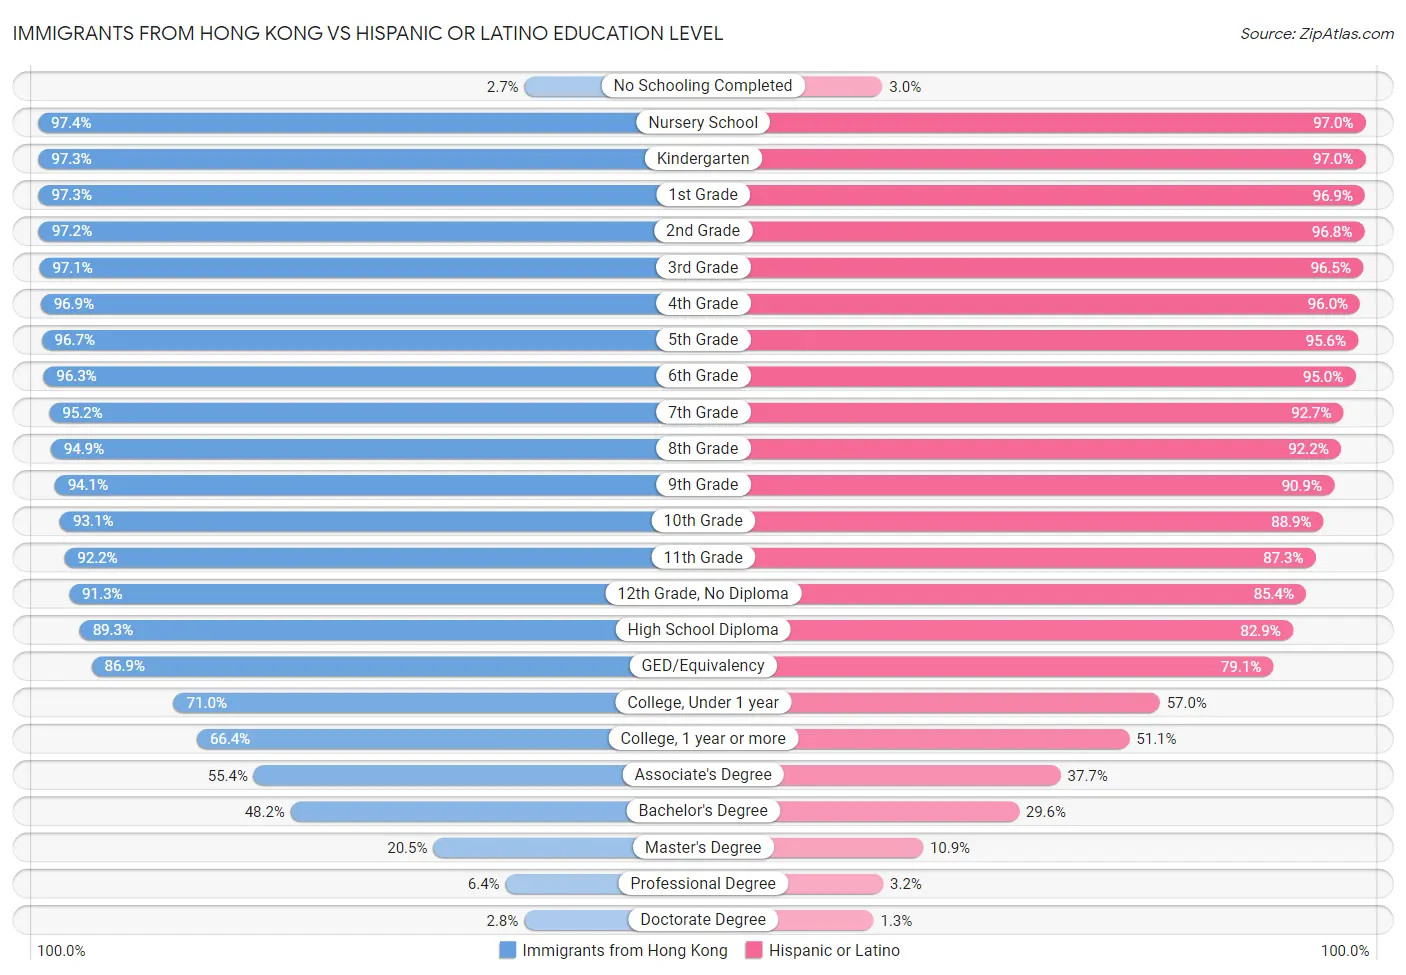 Immigrants from Hong Kong vs Hispanic or Latino Education Level